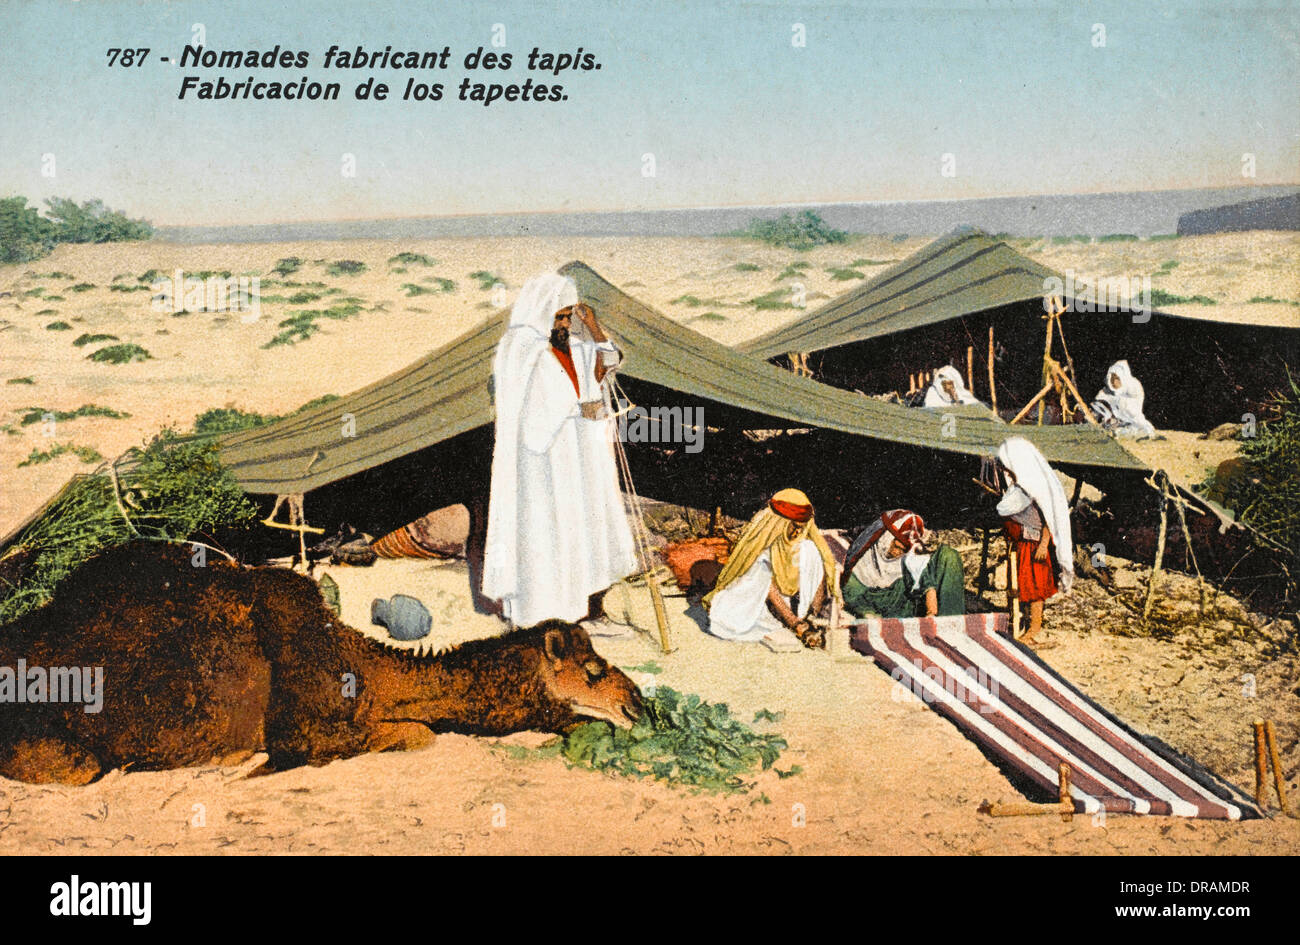 Nomads making rugs in the desert, Tunisia Stock Photo